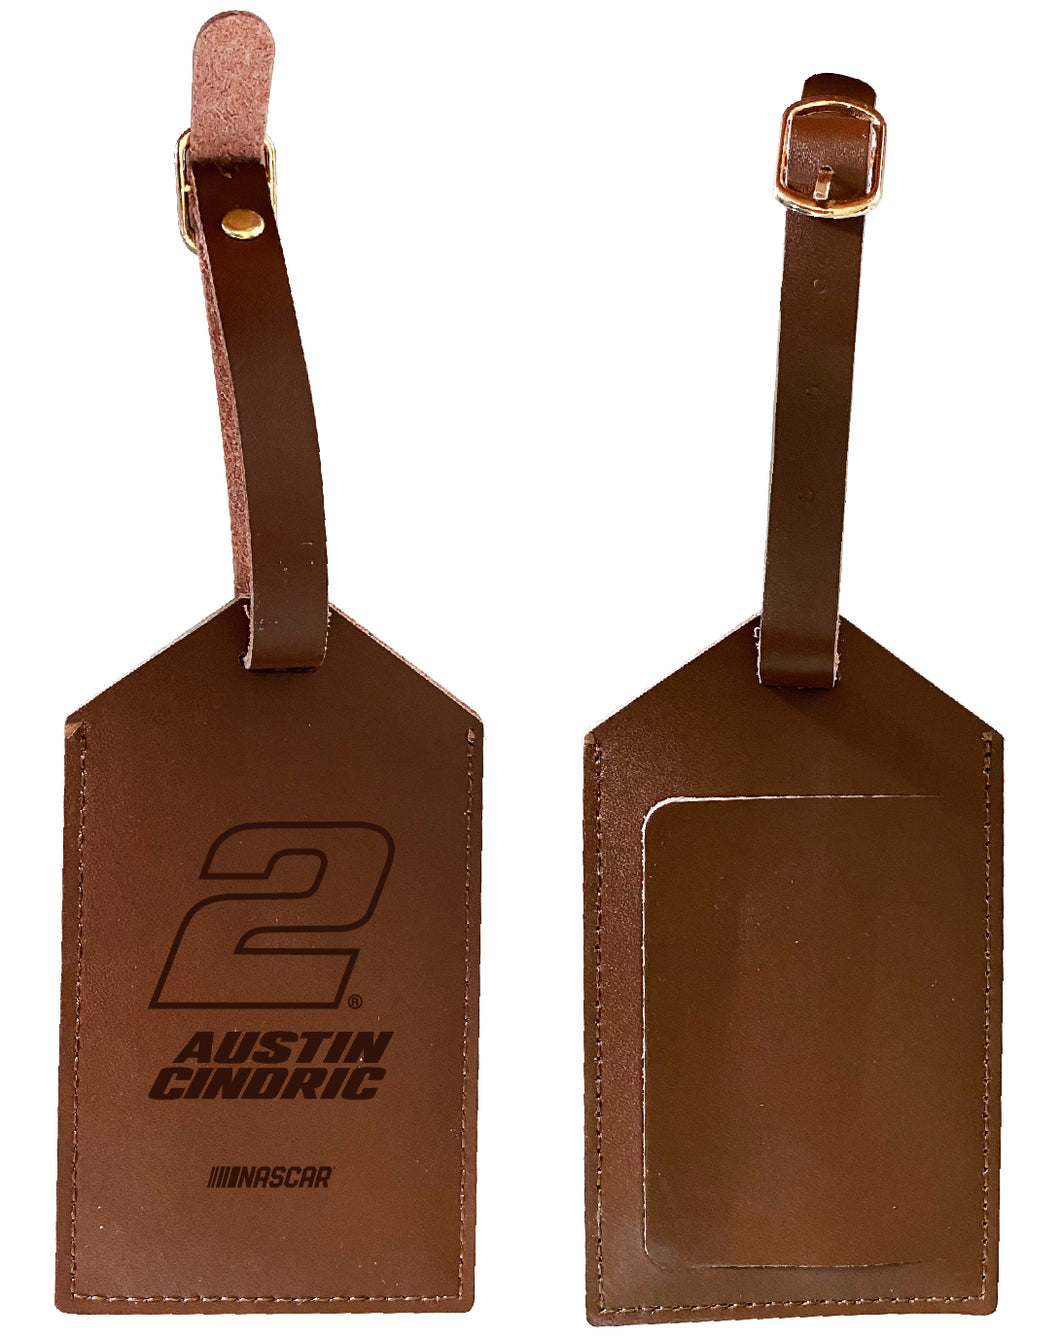 Nascar #2 Austin Cindric Leather Luggage Tag Engraved